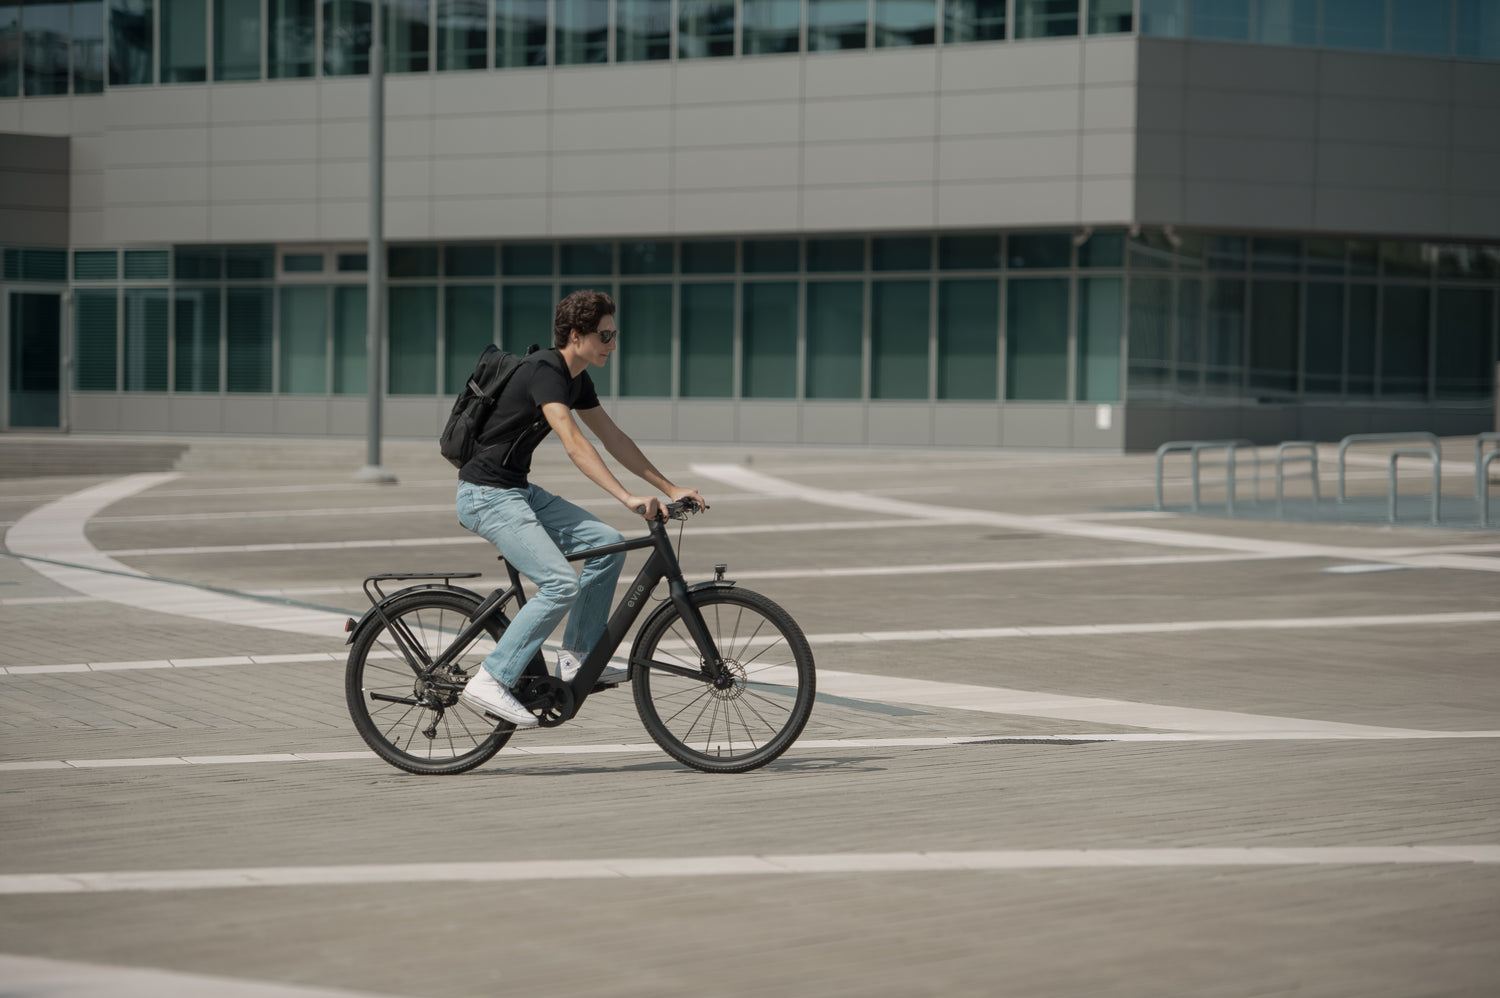 Beyond Frames: The Creative Drive Behind EVIE Bikes' Design